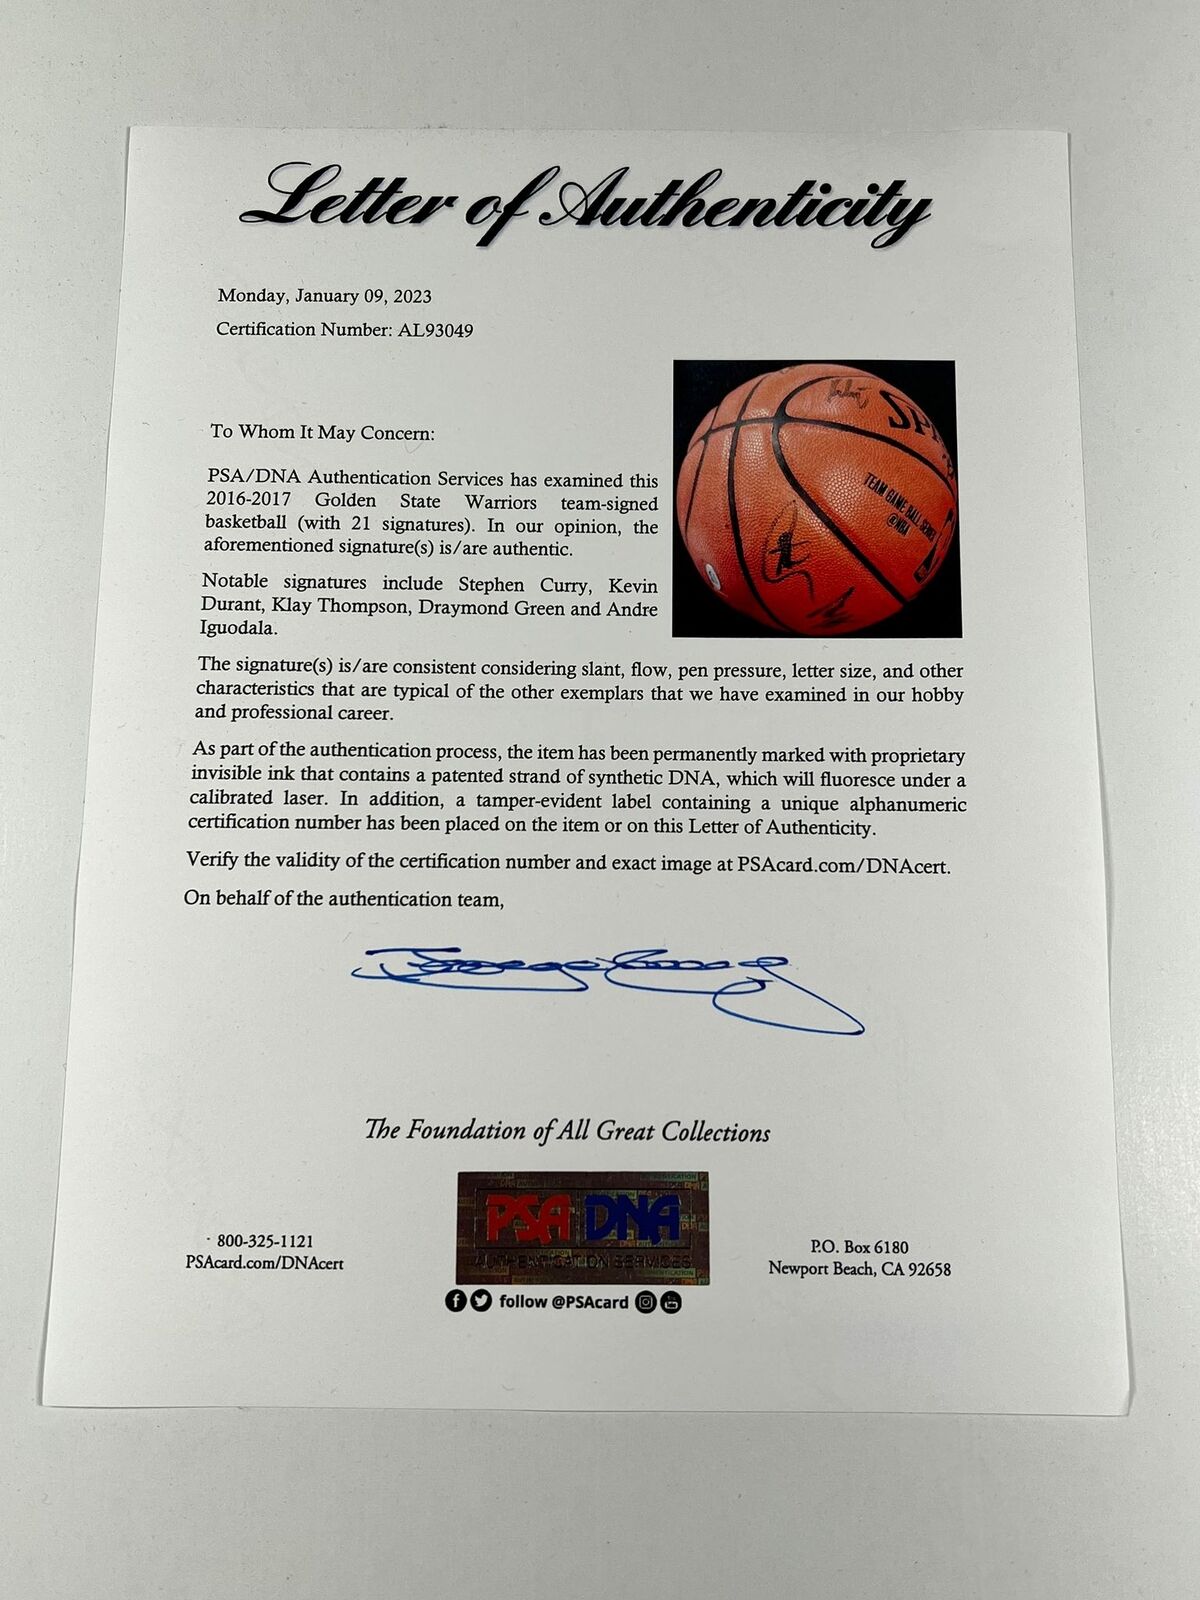 Kevin Durant Signed Warriors Jersey (PSA COA)